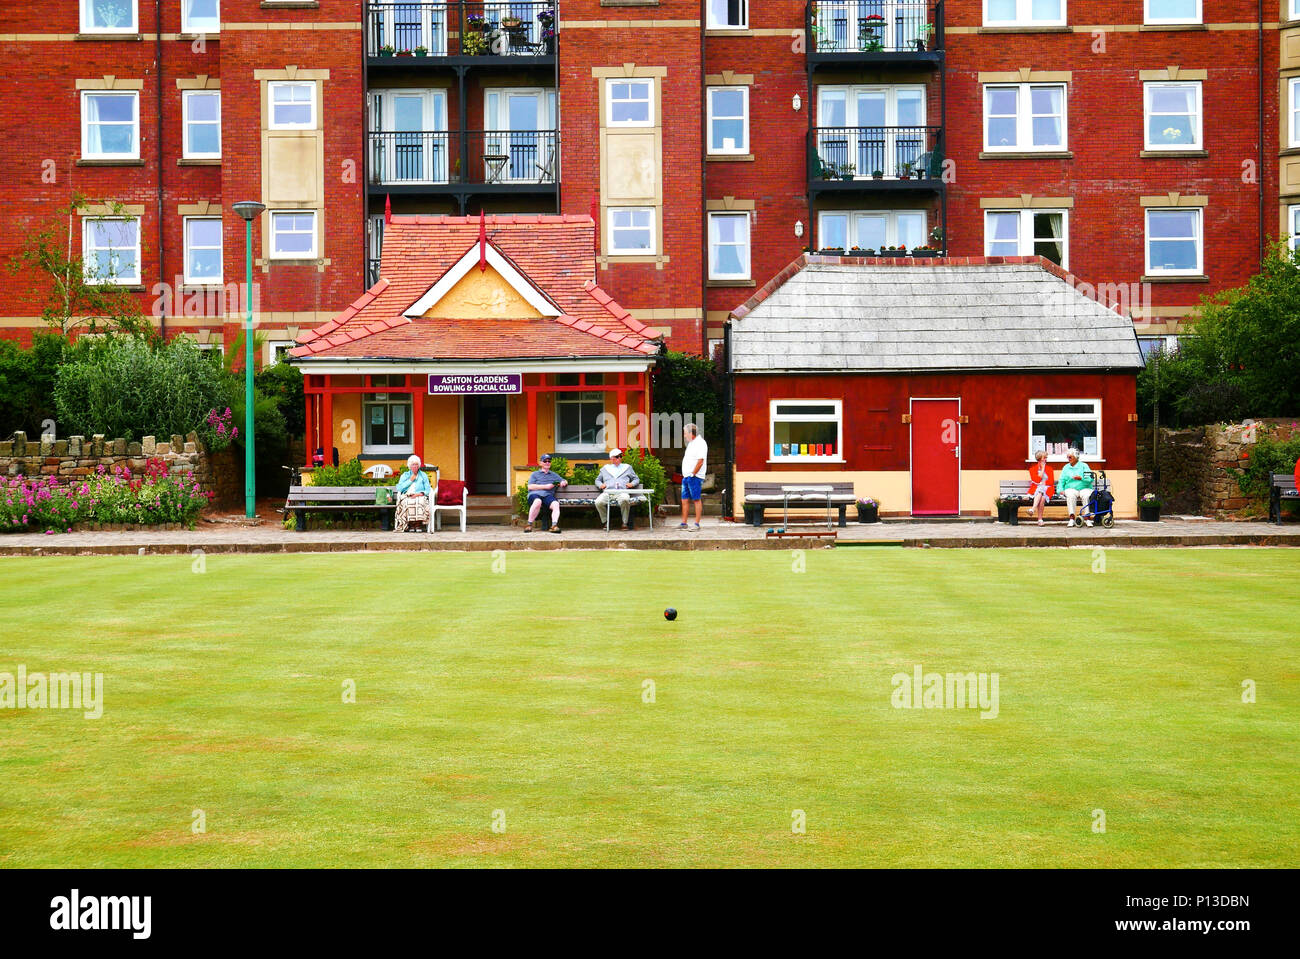 Ashton Gardens bowling and social club,St Annes,Lancashire,UK Stock Photo